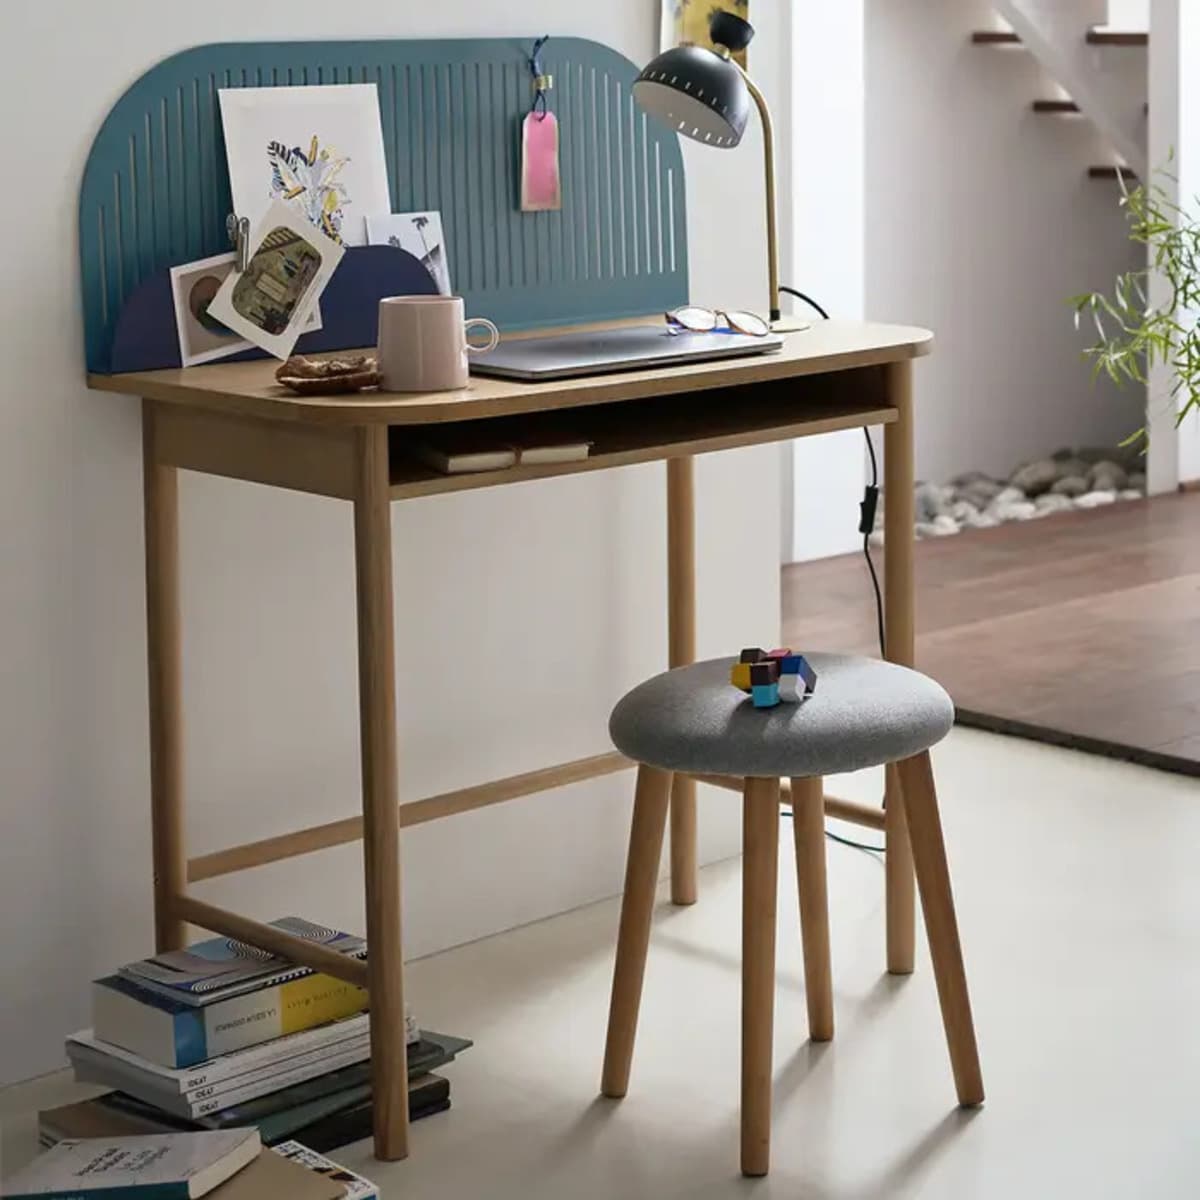 Un bureau minimaliste et ergonomique